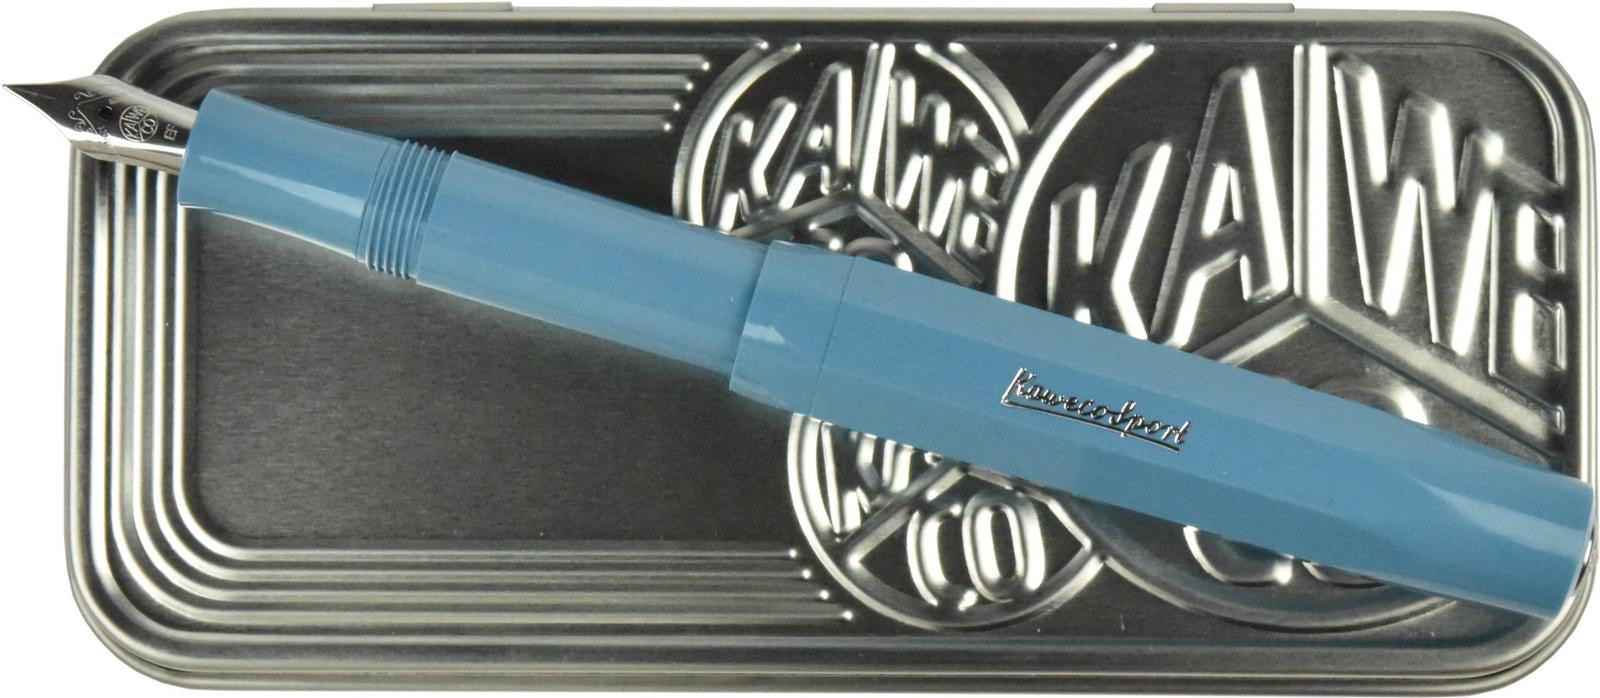 [MY & SG EDITION] Kaweco SKYLINE Fountain Pen in Ocean Blue